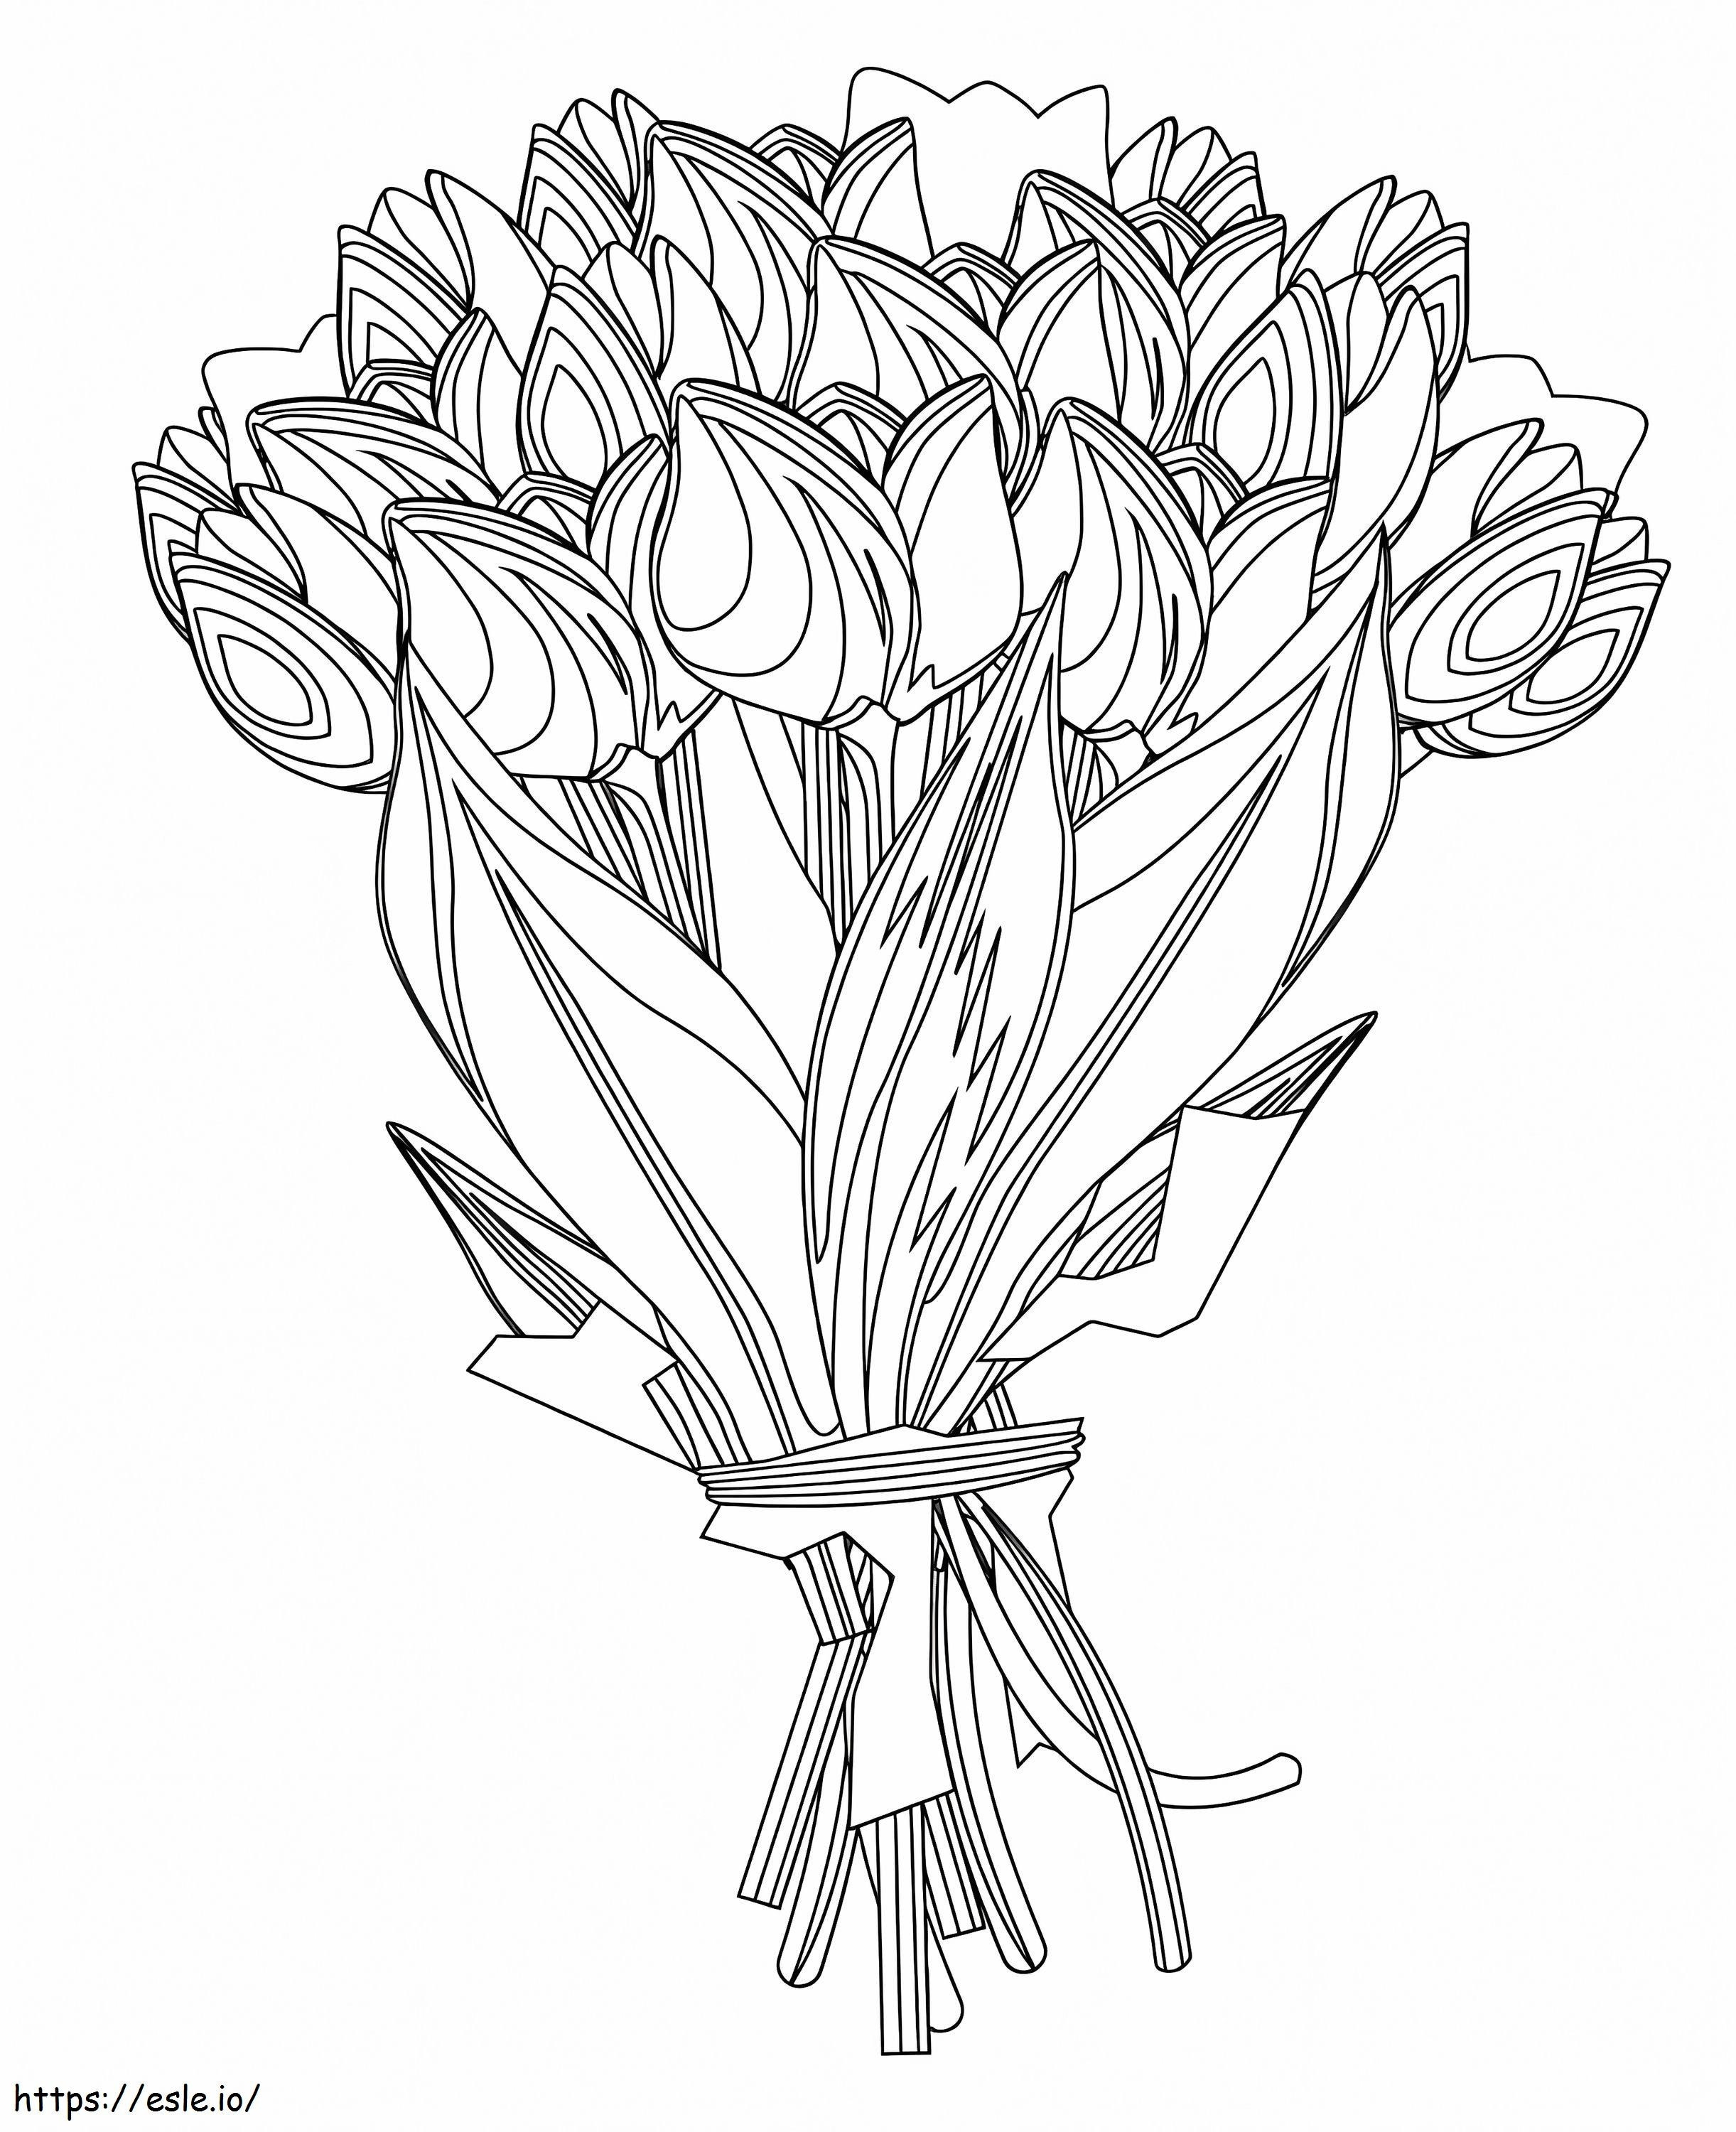 Buquê de flores tulipa para colorir